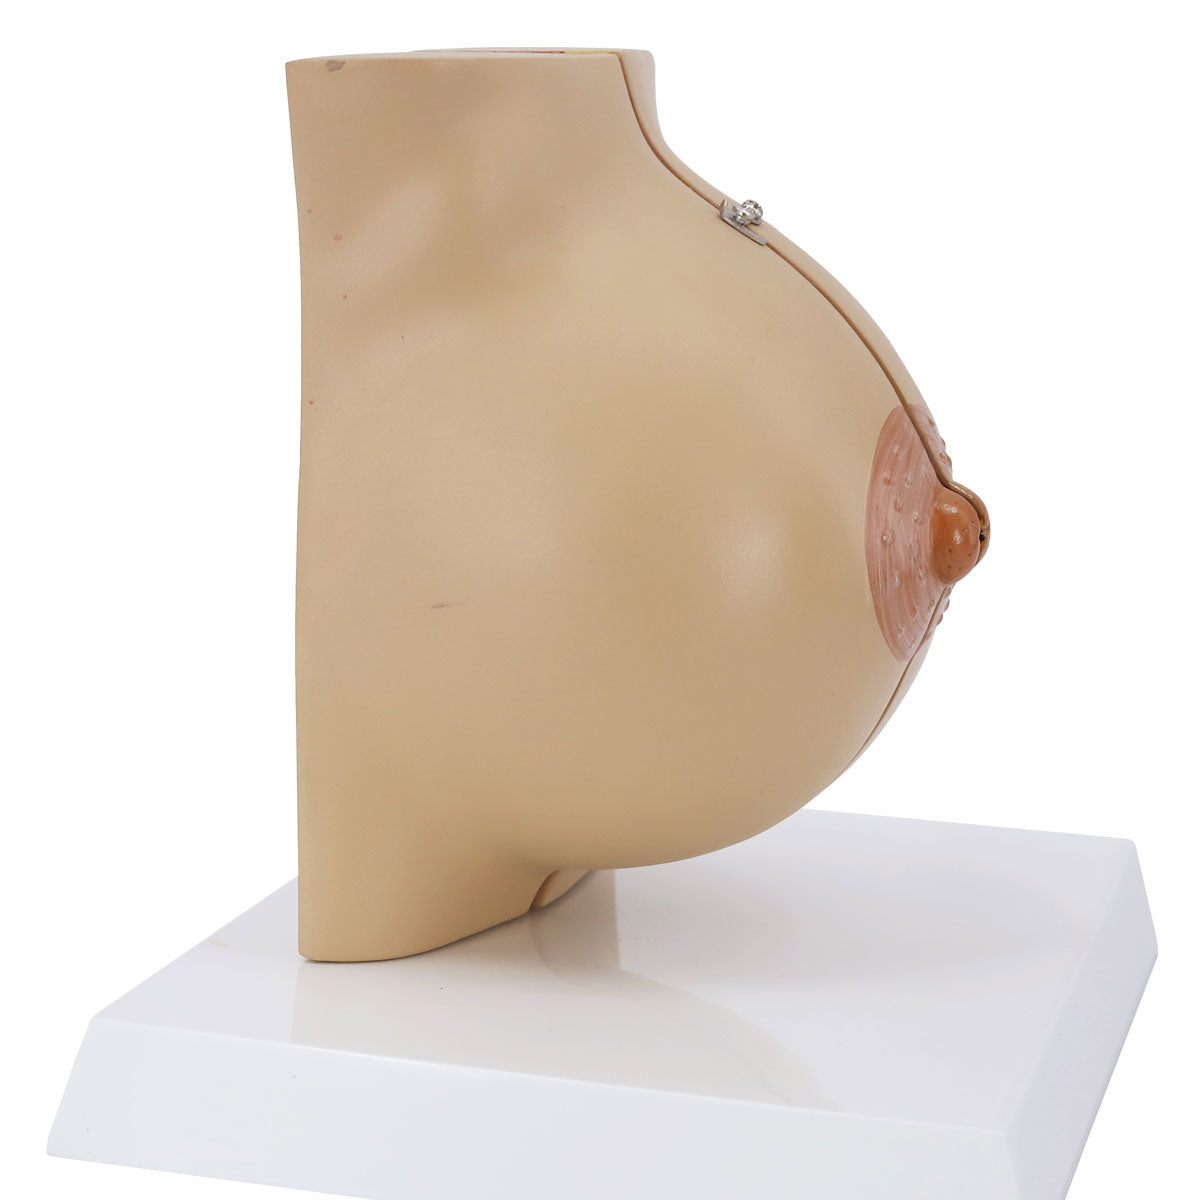 Evotech Scientific Human Female Anatomical Quiescent Breast Model